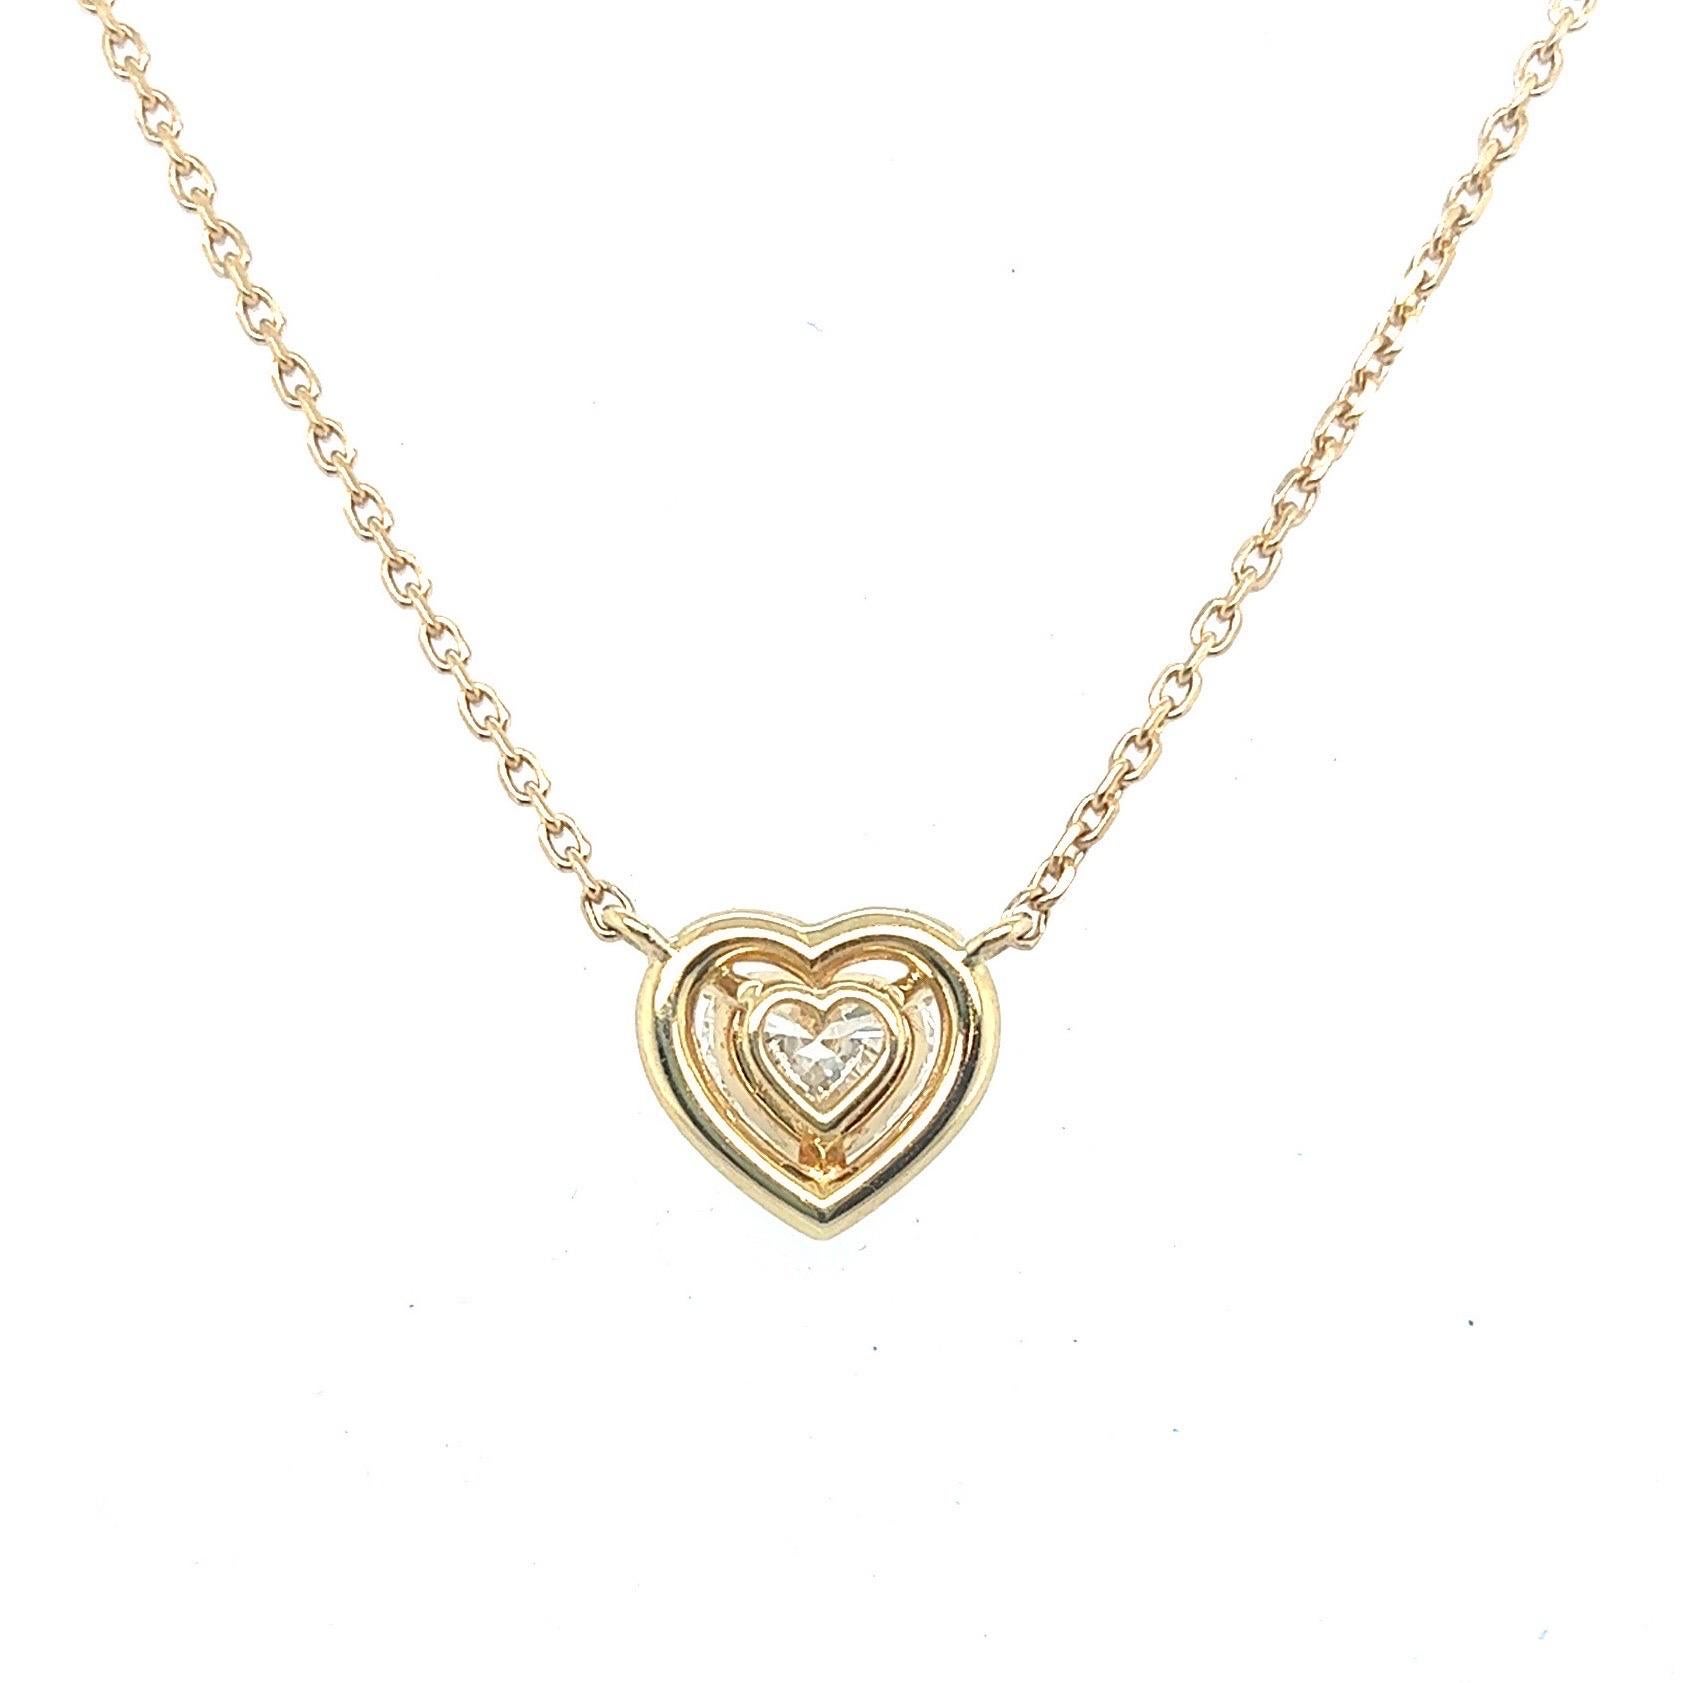 Heart Cut GIA Certified 1.06 Carat Heart-Shape Diamond 18 Karat Yellow Gold Necklace For Sale